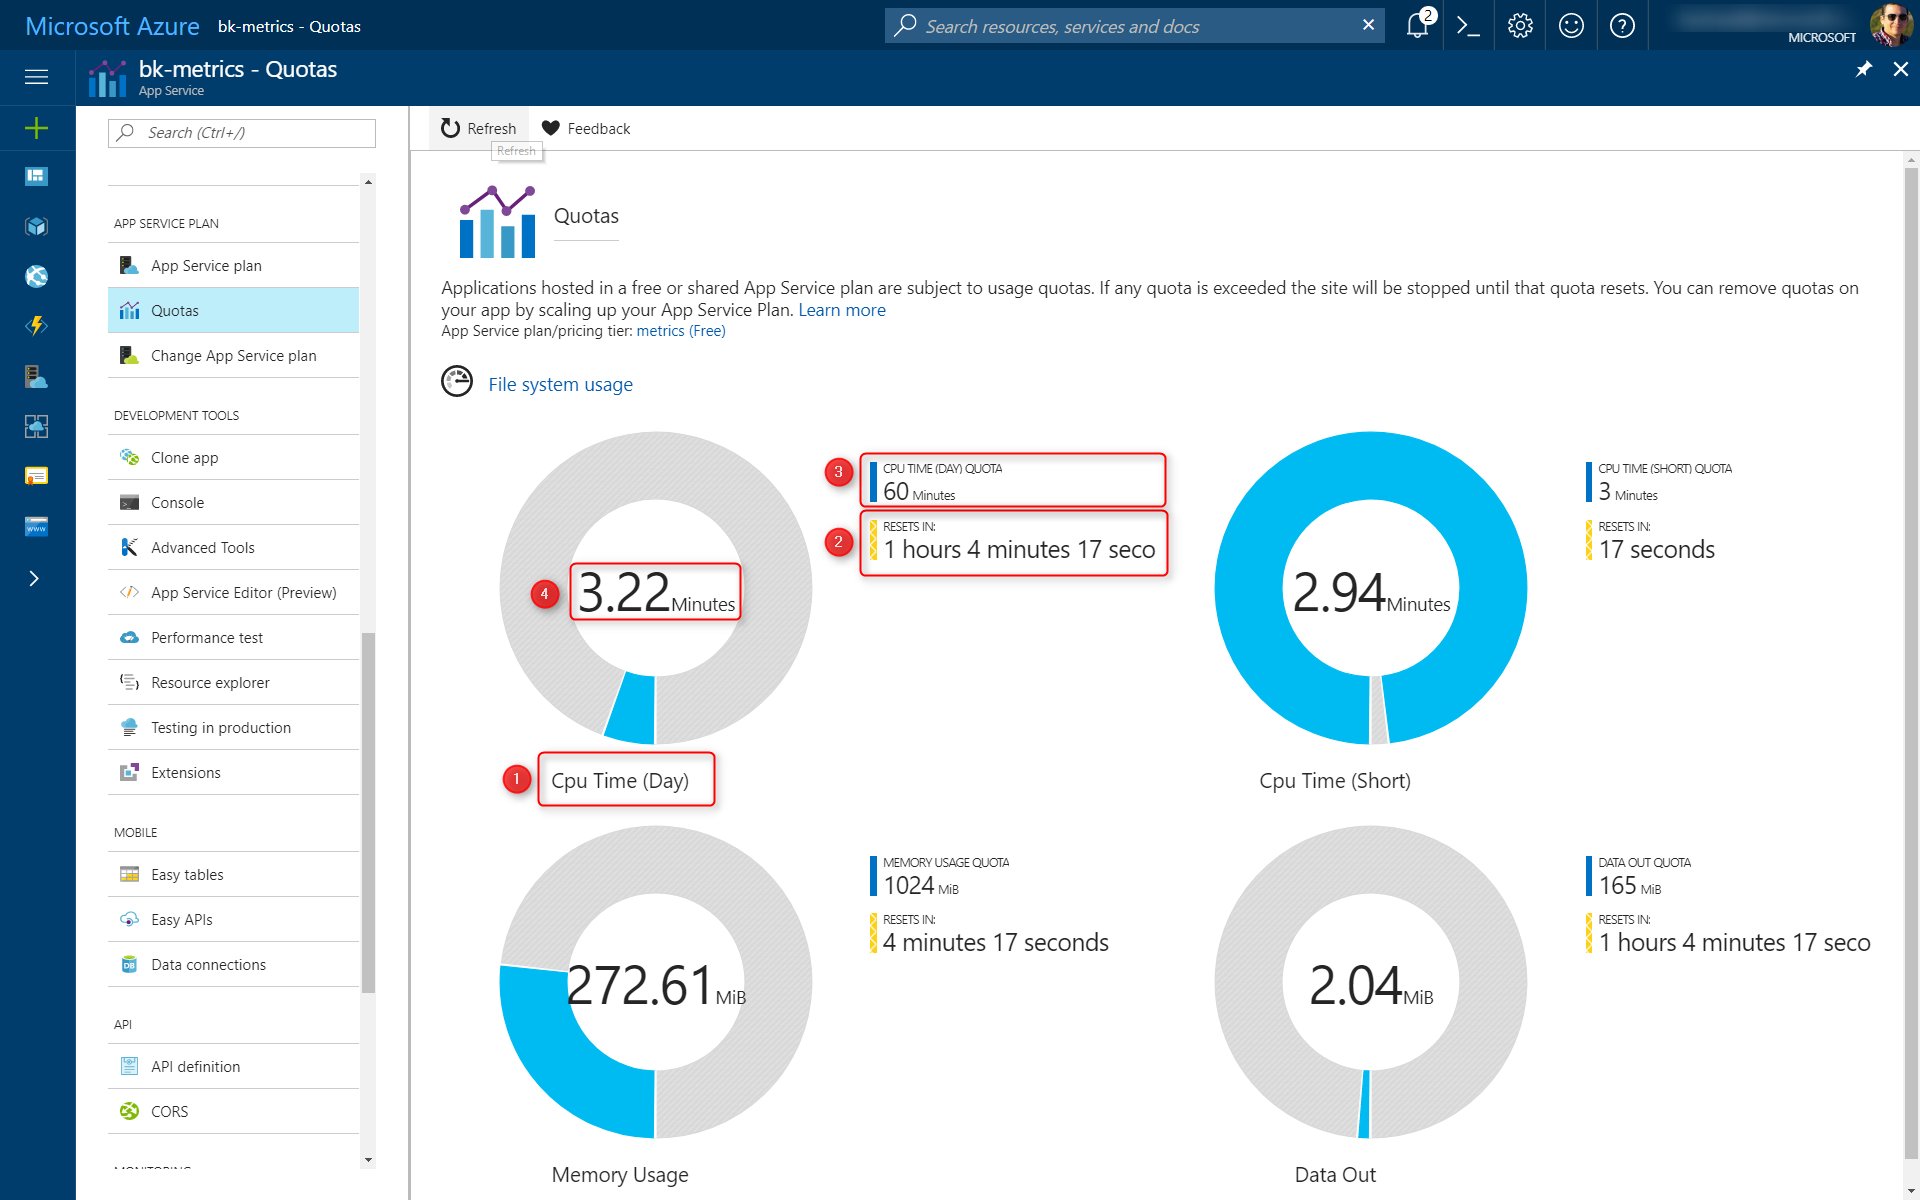 Bagan kuota di portal Microsoft Azure